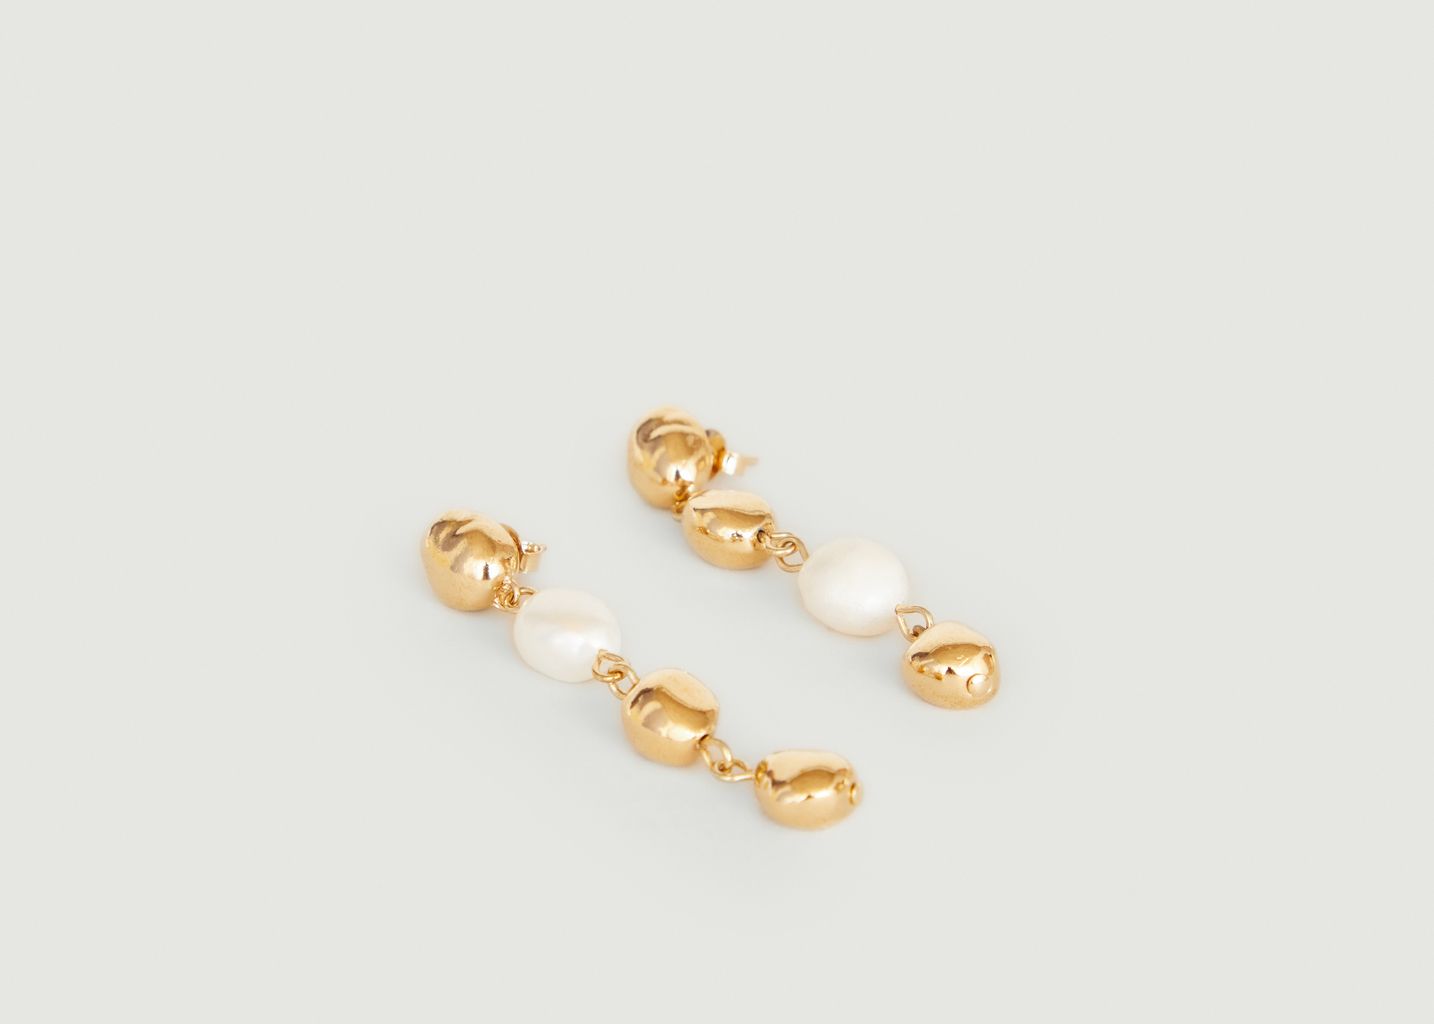 Lise long earrings with pearls - Louise Damas